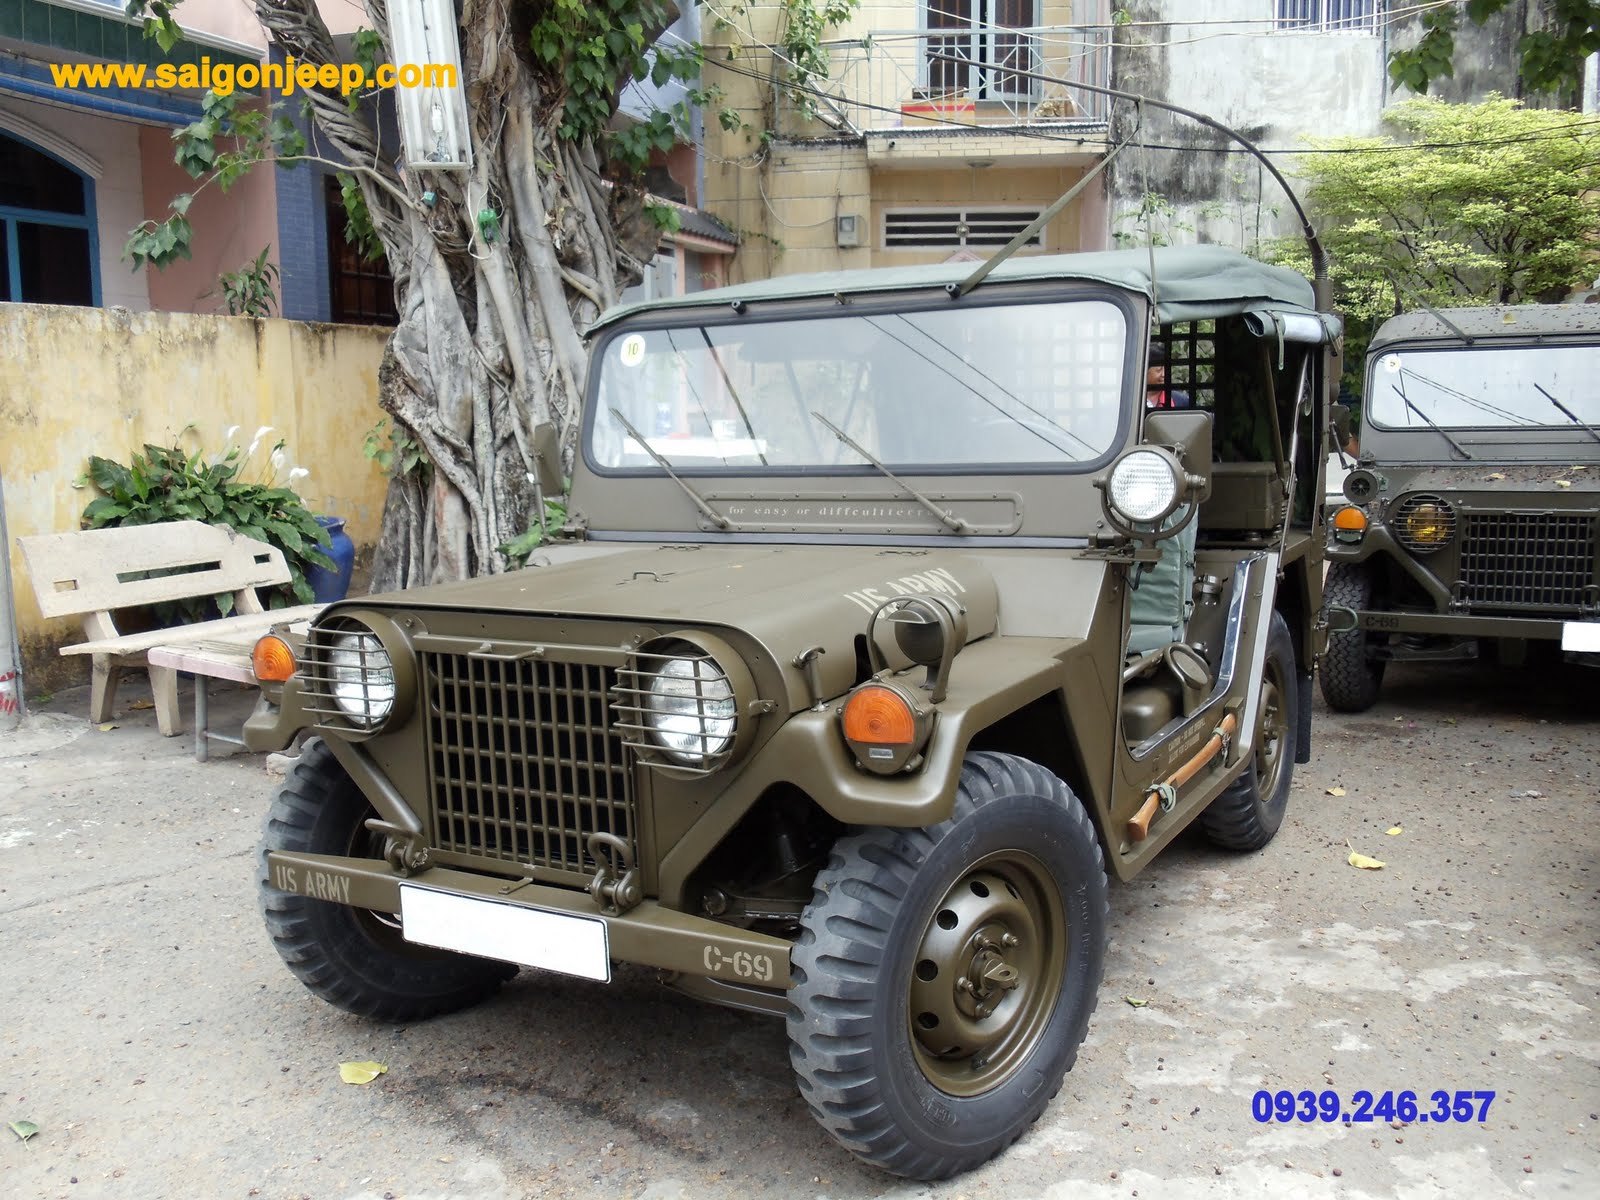 M151a2 jeep #2